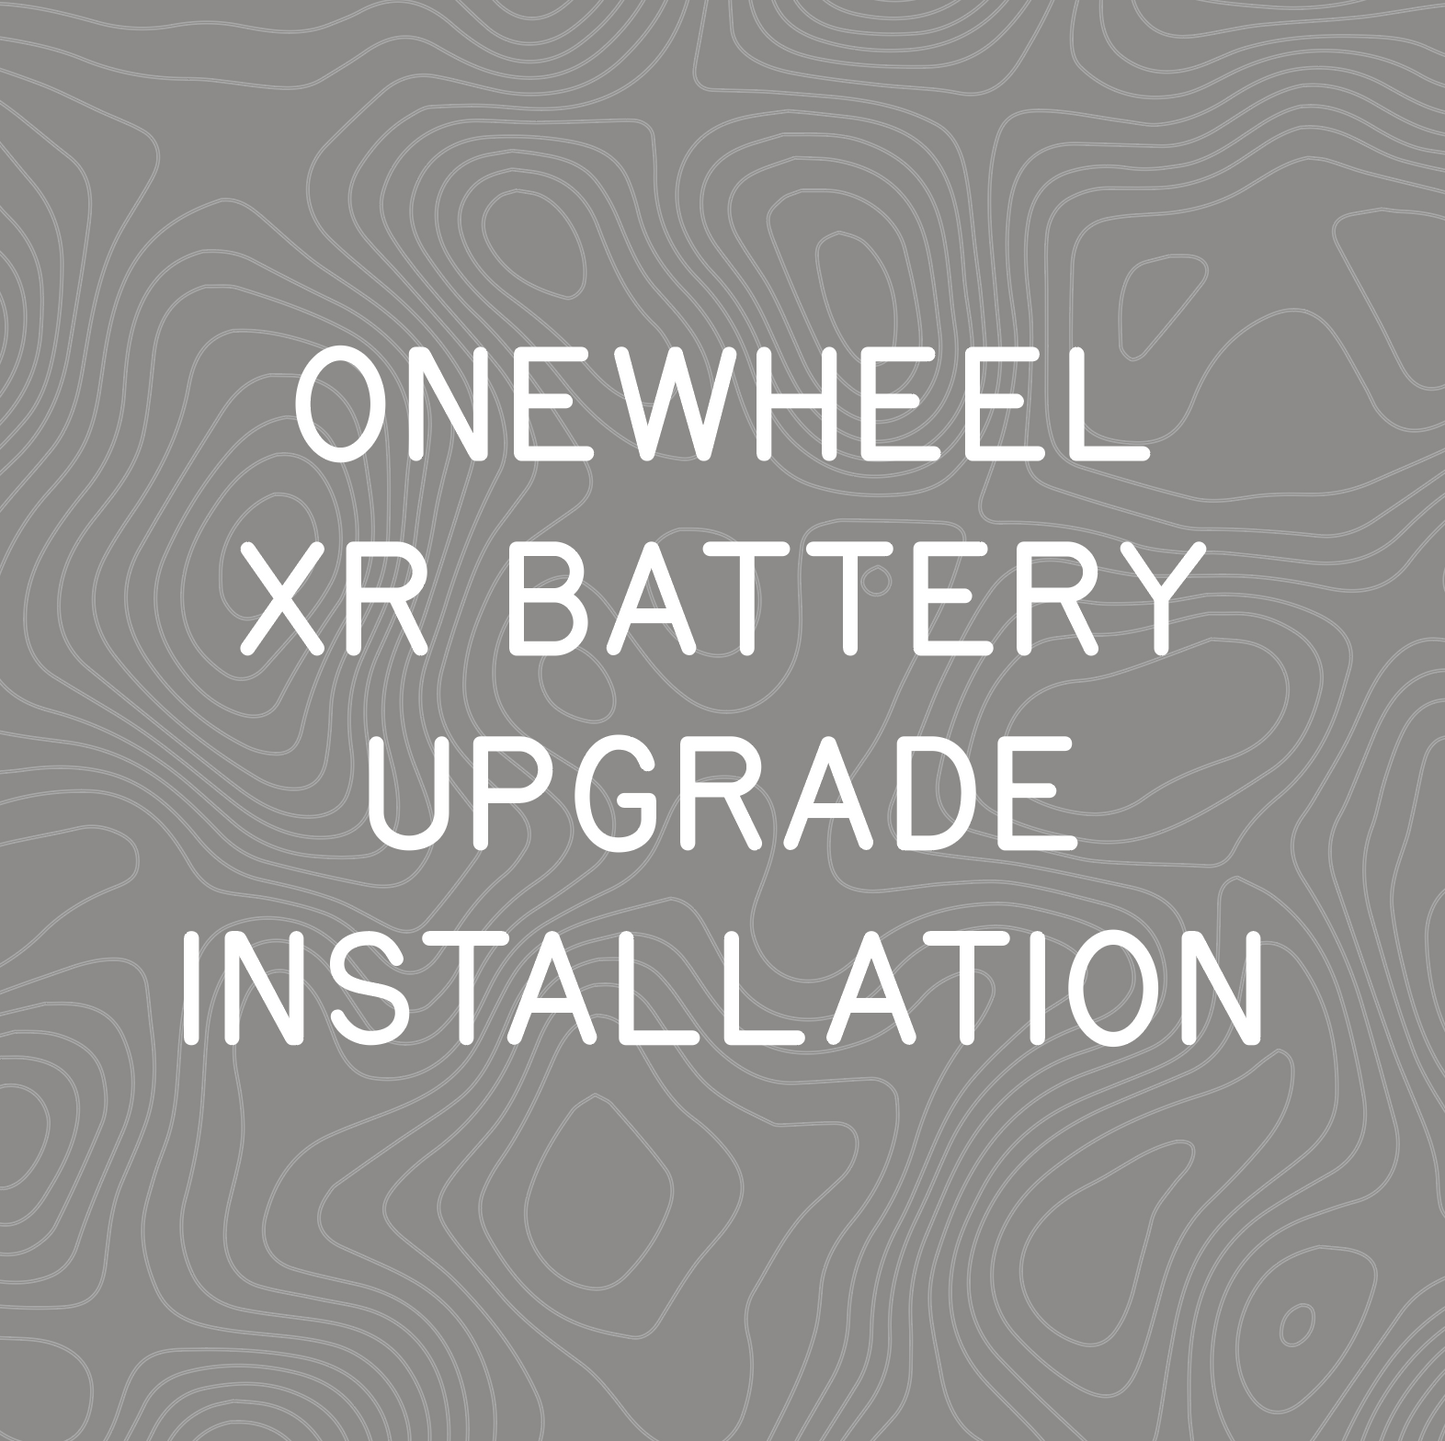 Onewheel XR Battery Upgrade Installation